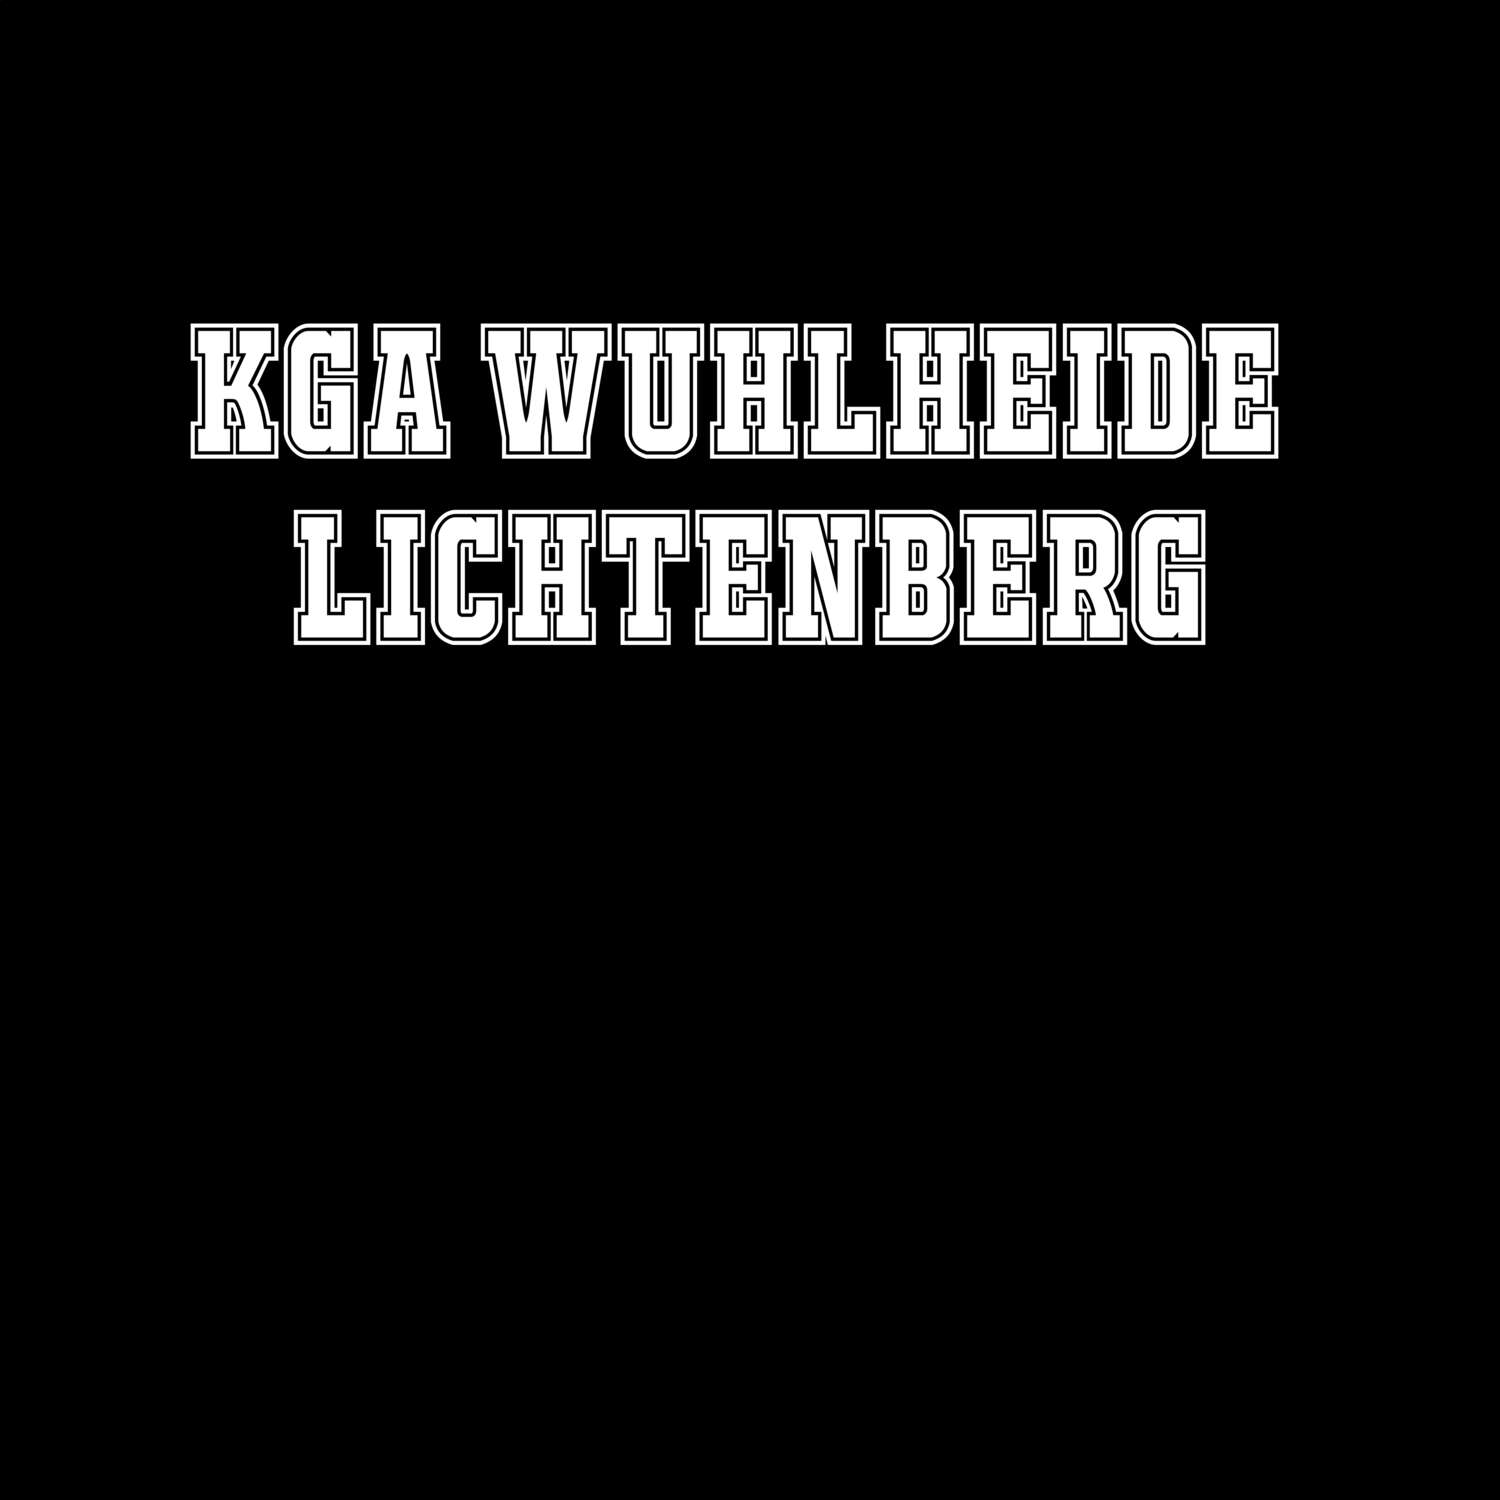 KGA Wuhlheide Lichtenberg T-Shirt »Classic«